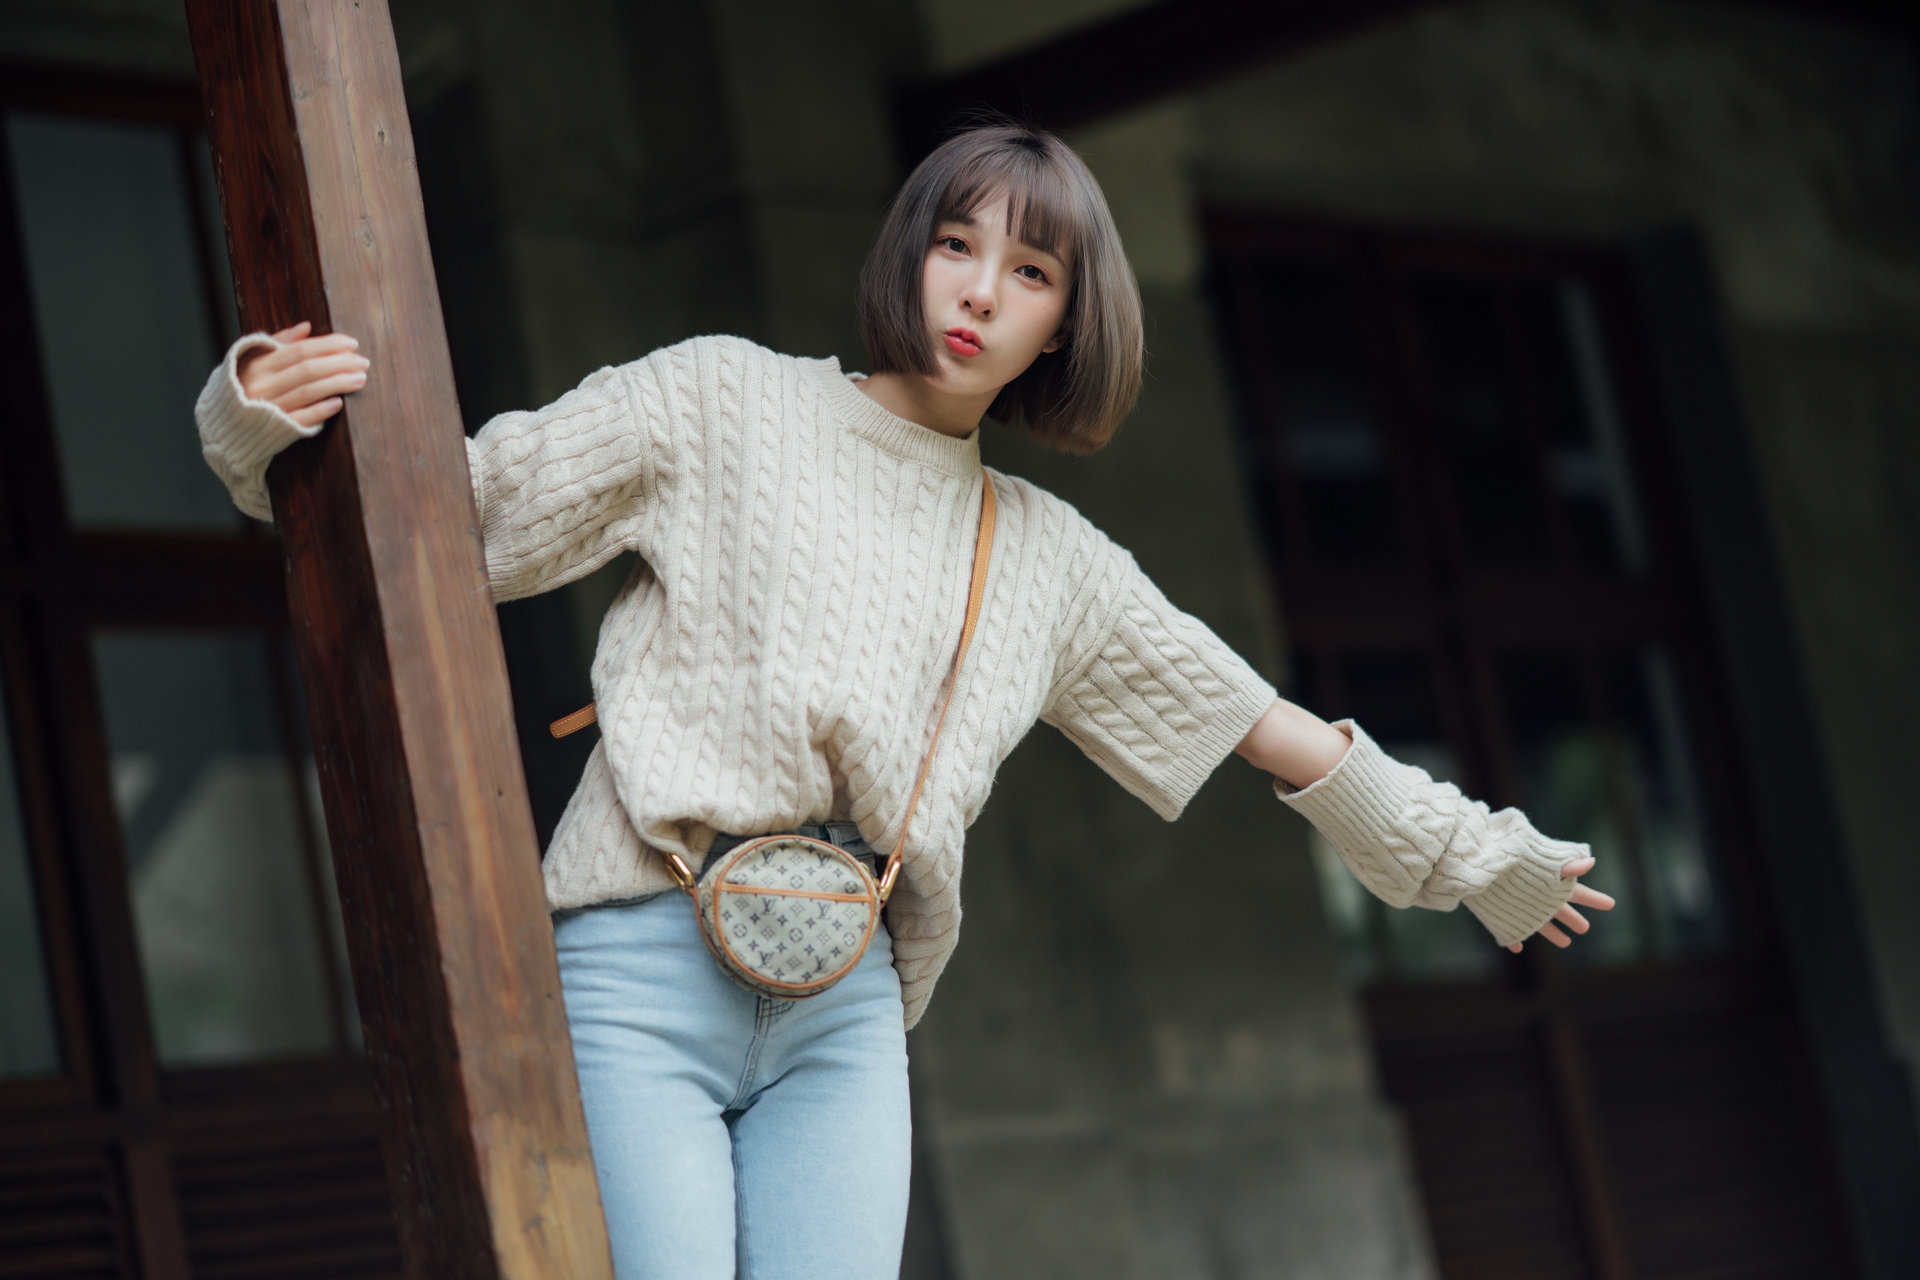 Asian Model Women Short Hair Dark Hair Jeans Pullover Bag Arm Warmers Depth Of Field 1920x1280